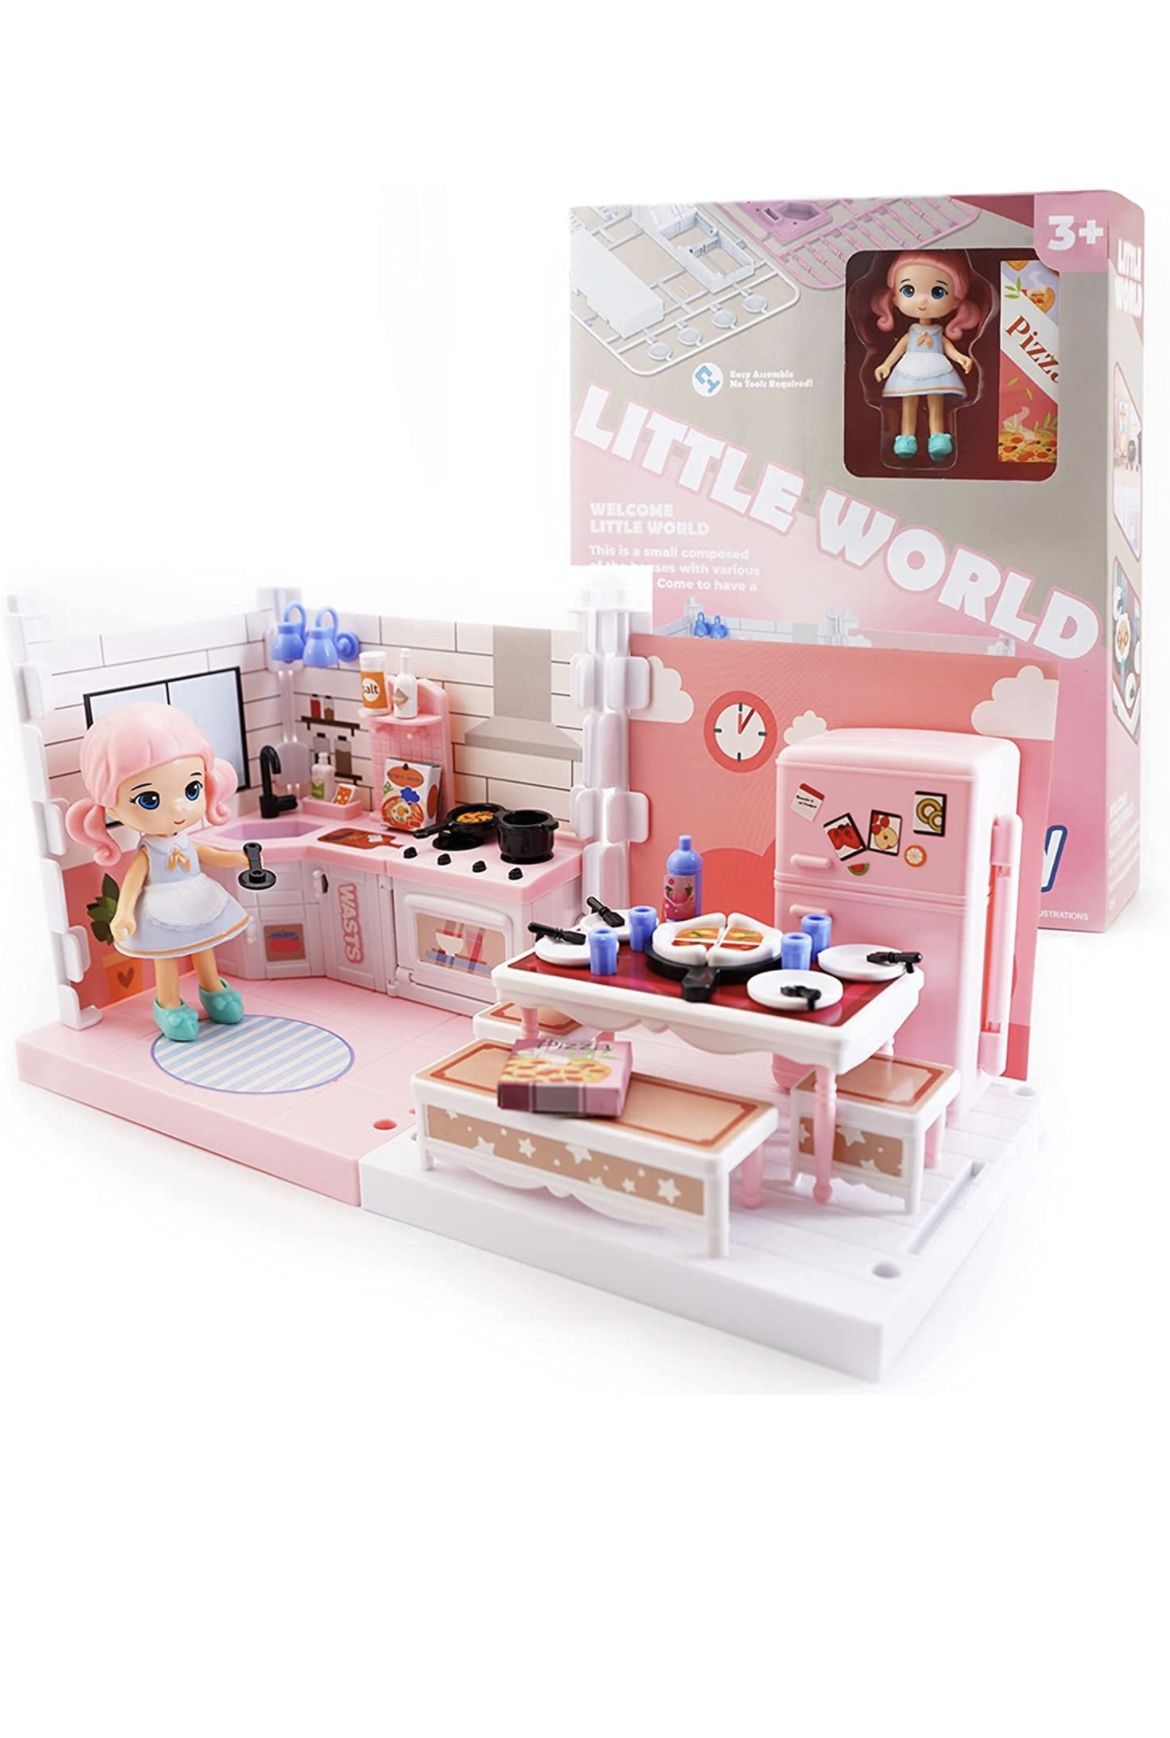 DIY Miniature Dollhouse Kit, Uorker Toys for 3 Year Old Girls Doll House 4-5 Year Old Toys for Girls Dollhouse Kit Furniture and Dolls Girls Toys Gift